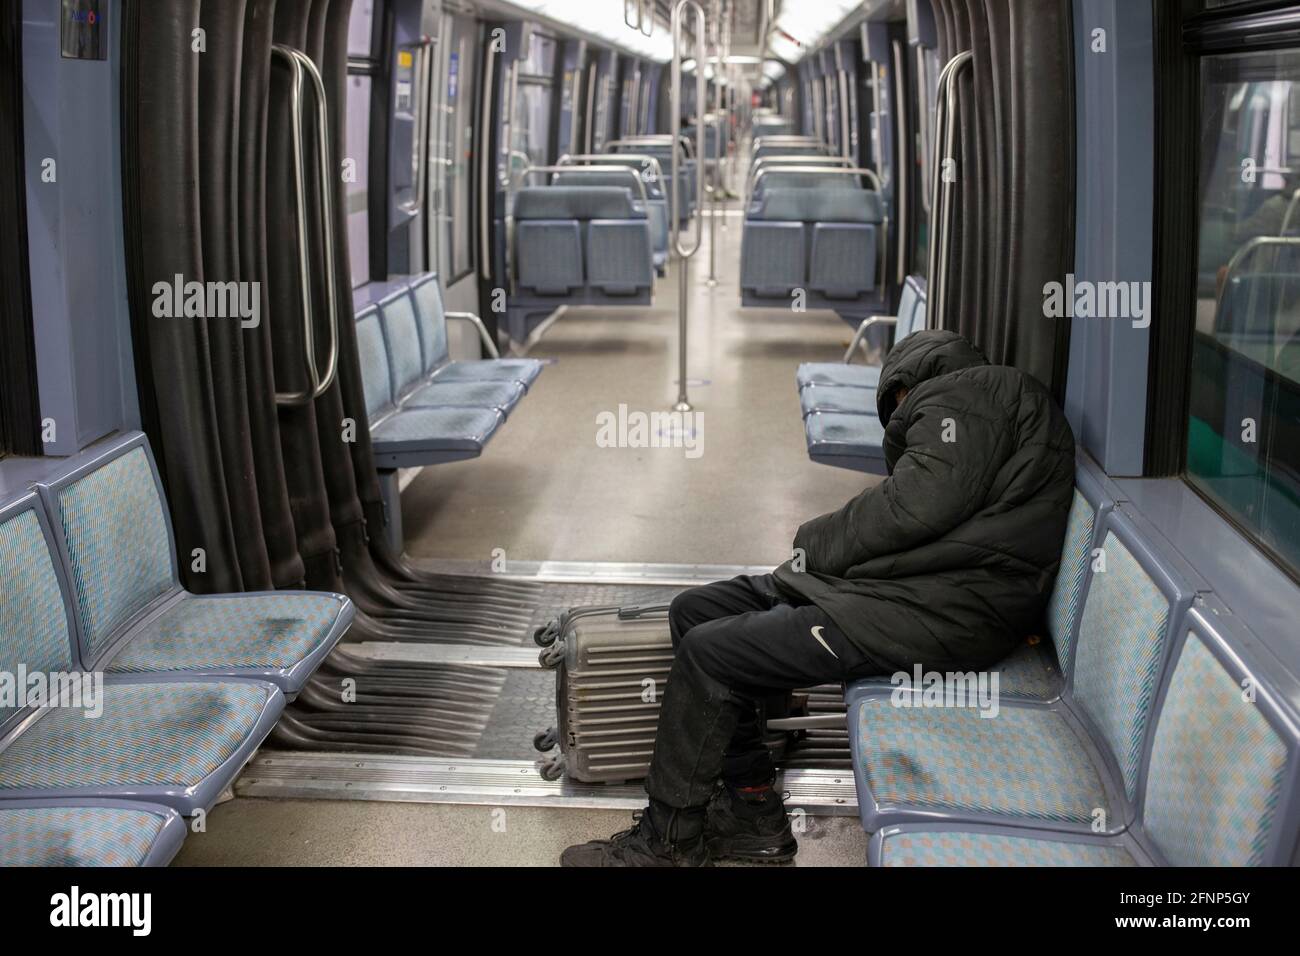 Homeless man sleeping in a Paris subway car, France Stock Photo